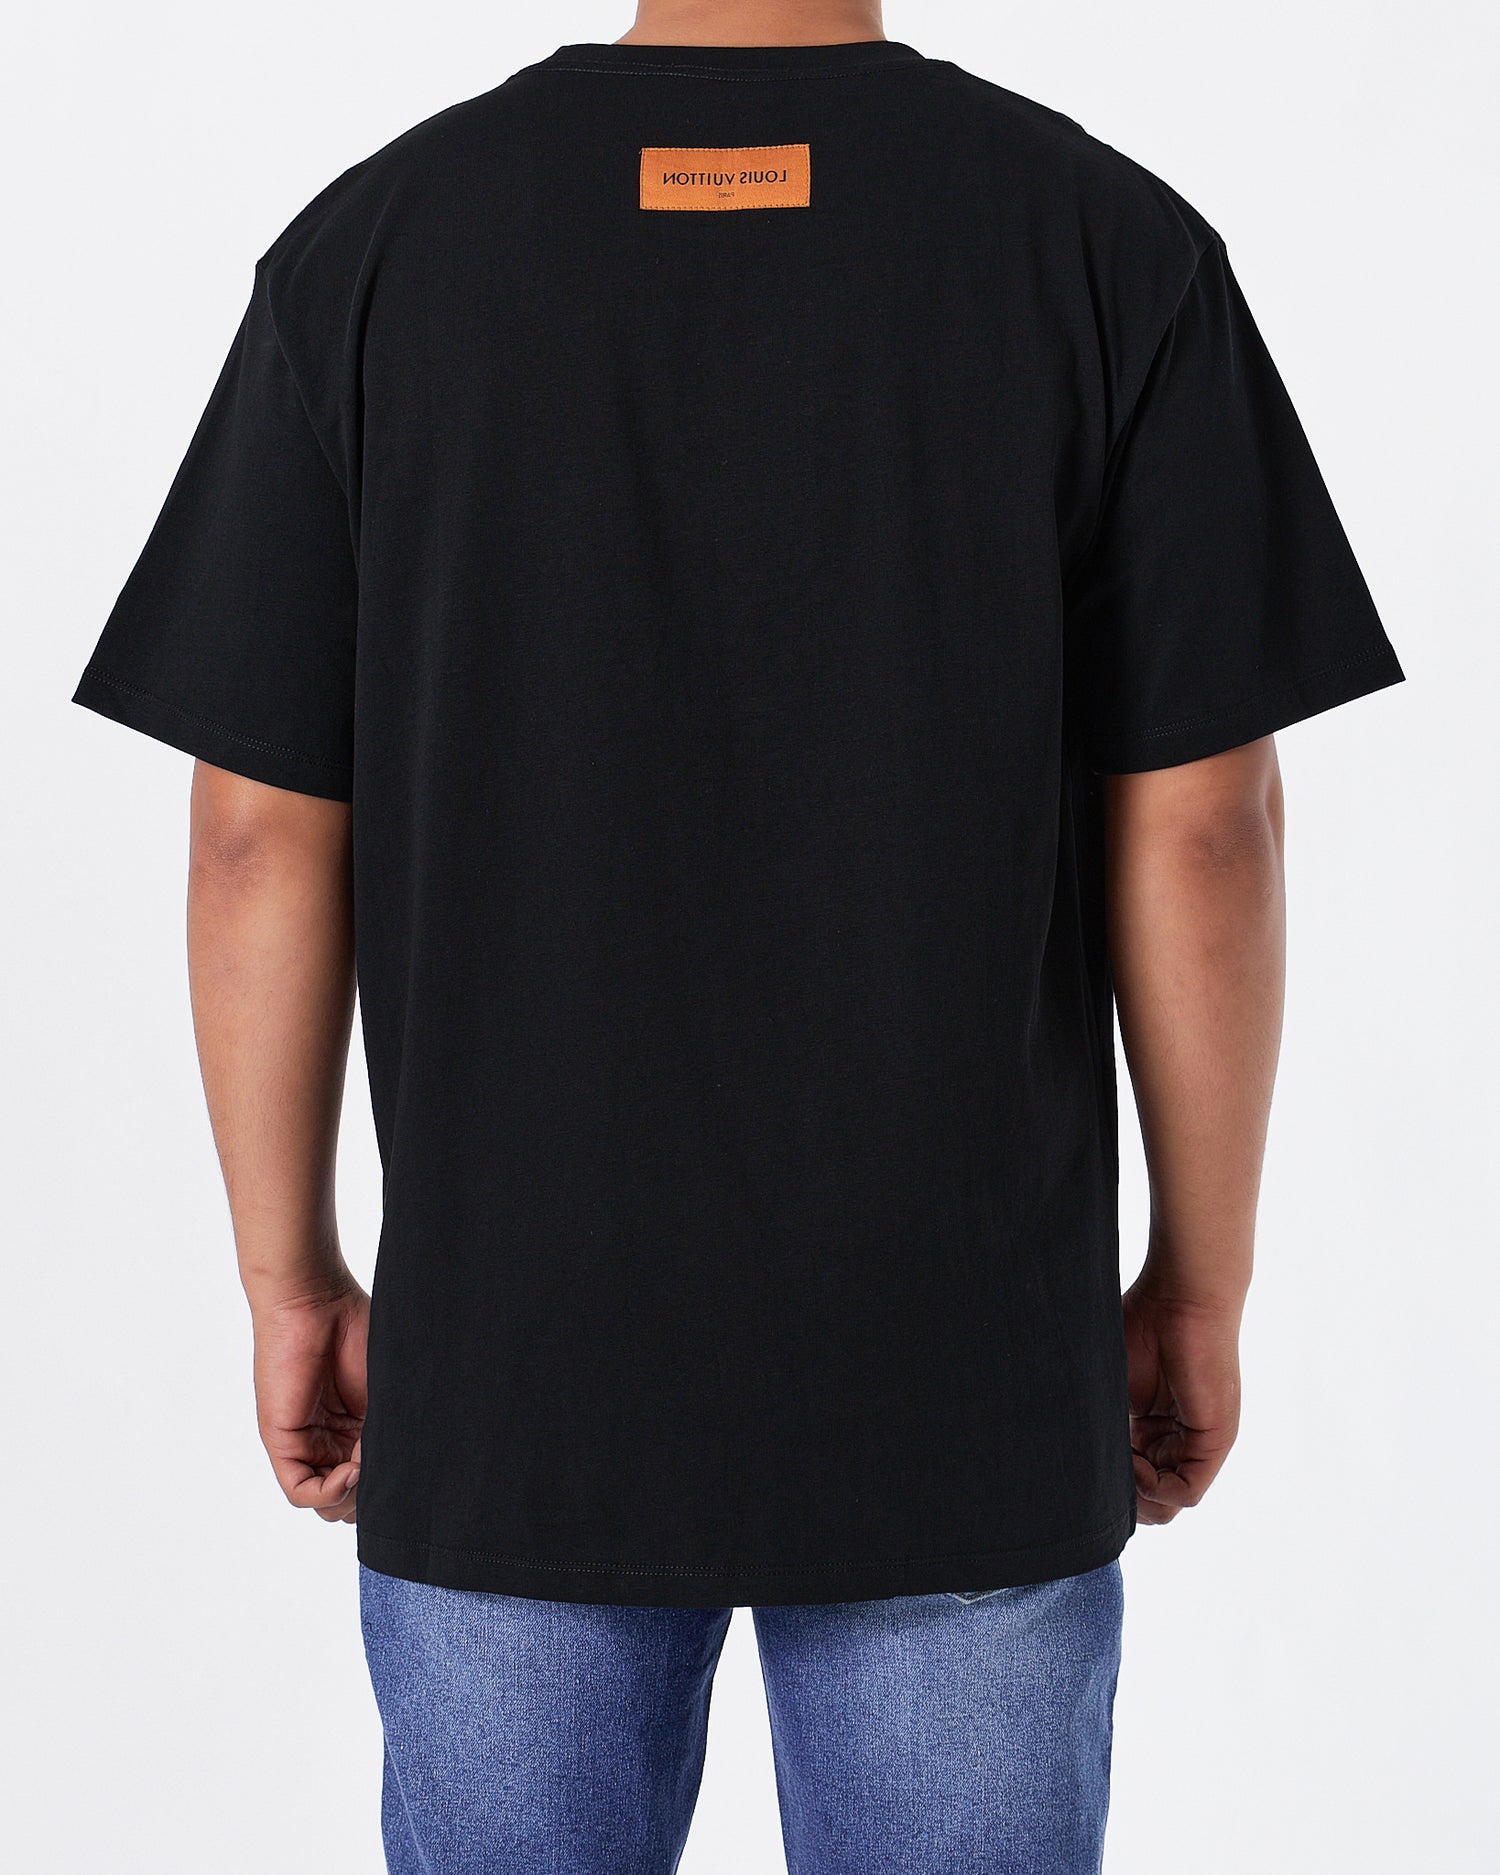 LV Pumpkins Printed Men Black T-Shirt 23.90